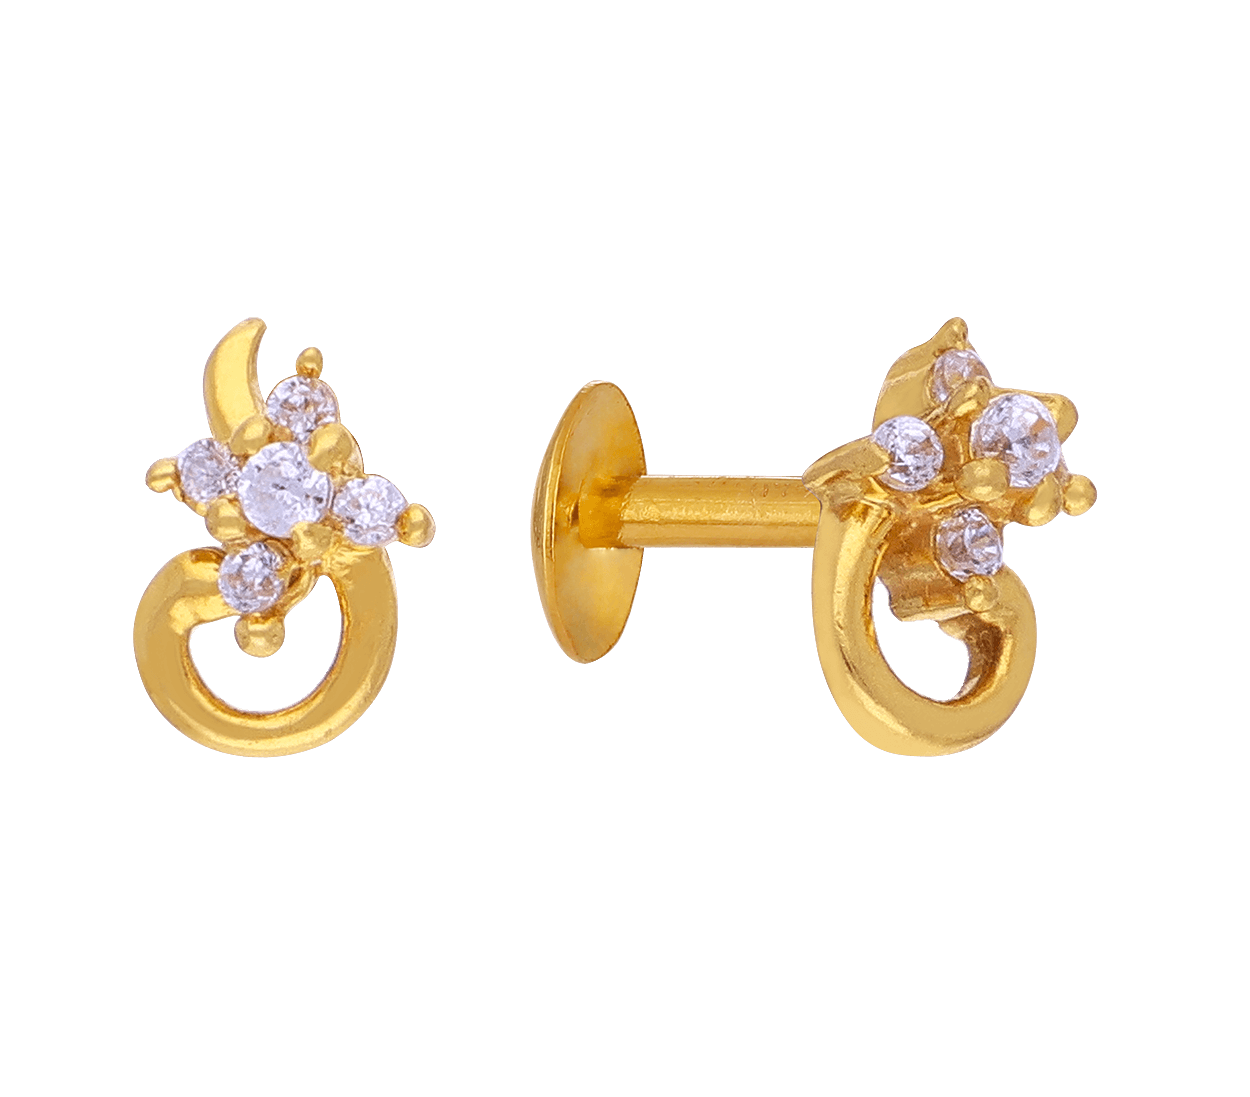 Artwork gold studs - Formia Design Custom Jewelry